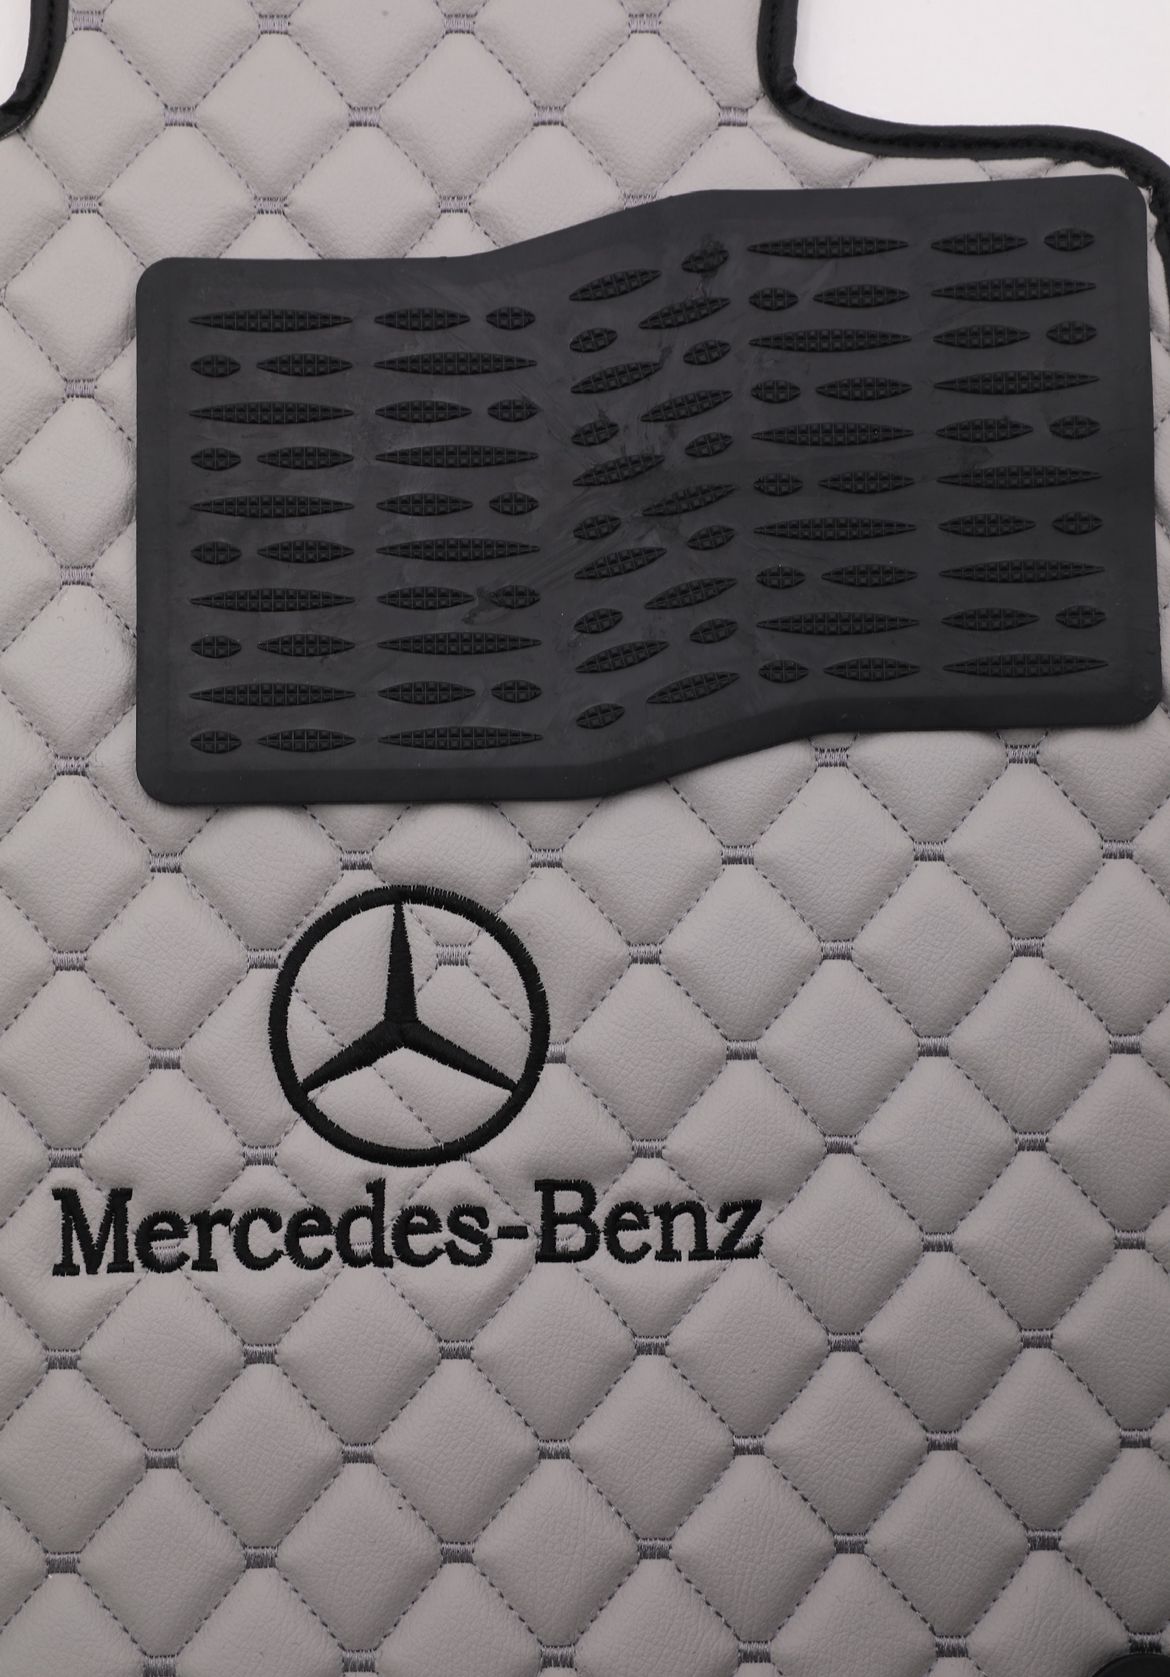 For Mercedes Benz EQC 2019-Onwards Model Special Design Leather Custom Car Mat 4x